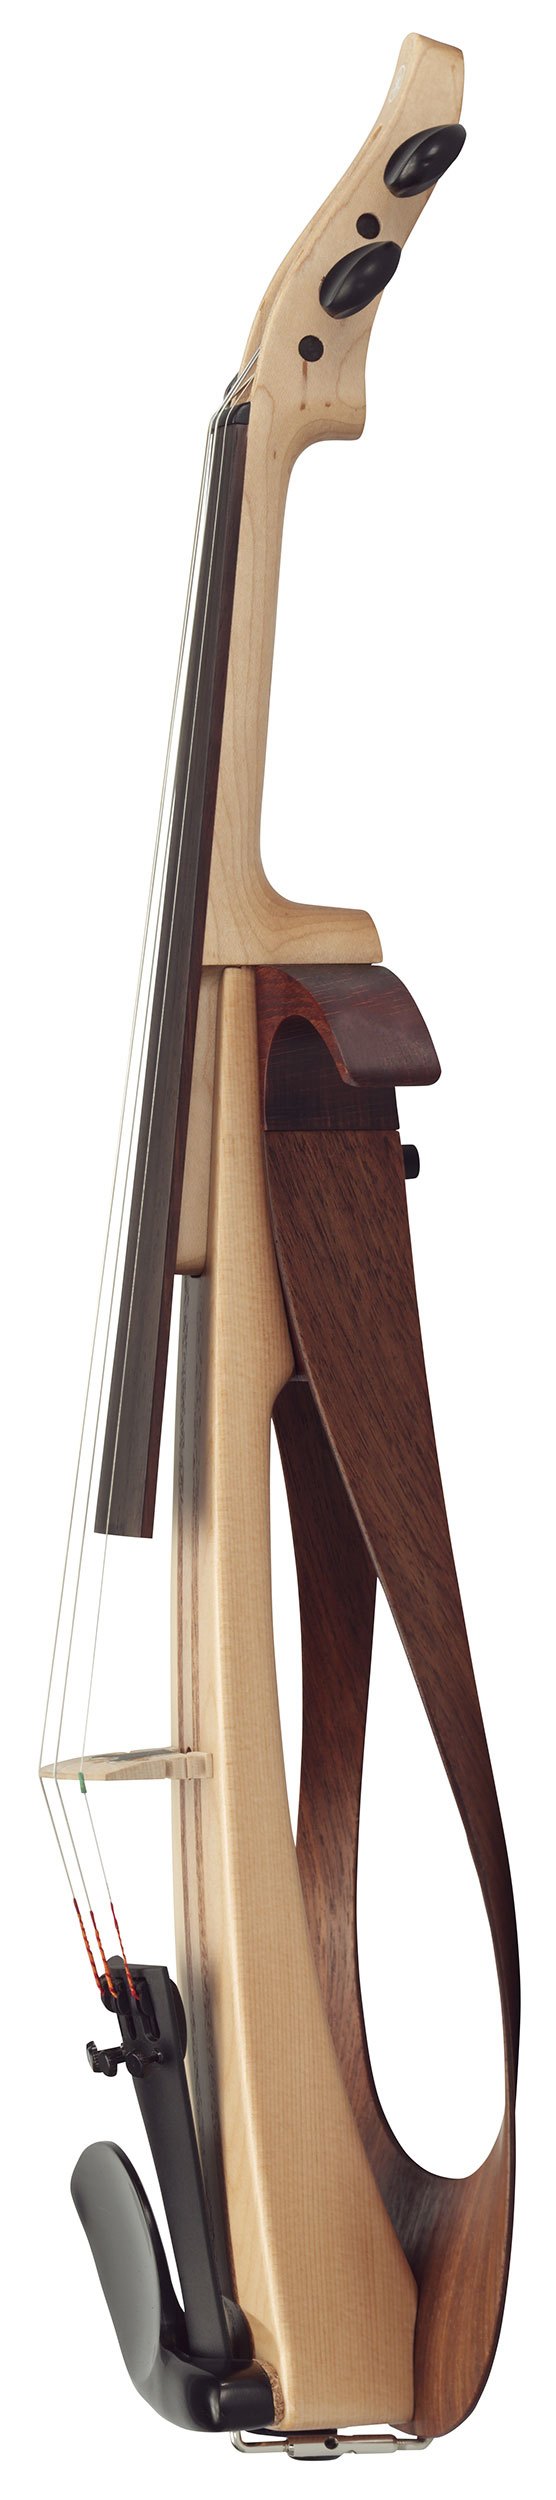 Yamaha YEV105 五弦電子小提琴 (多色選擇)